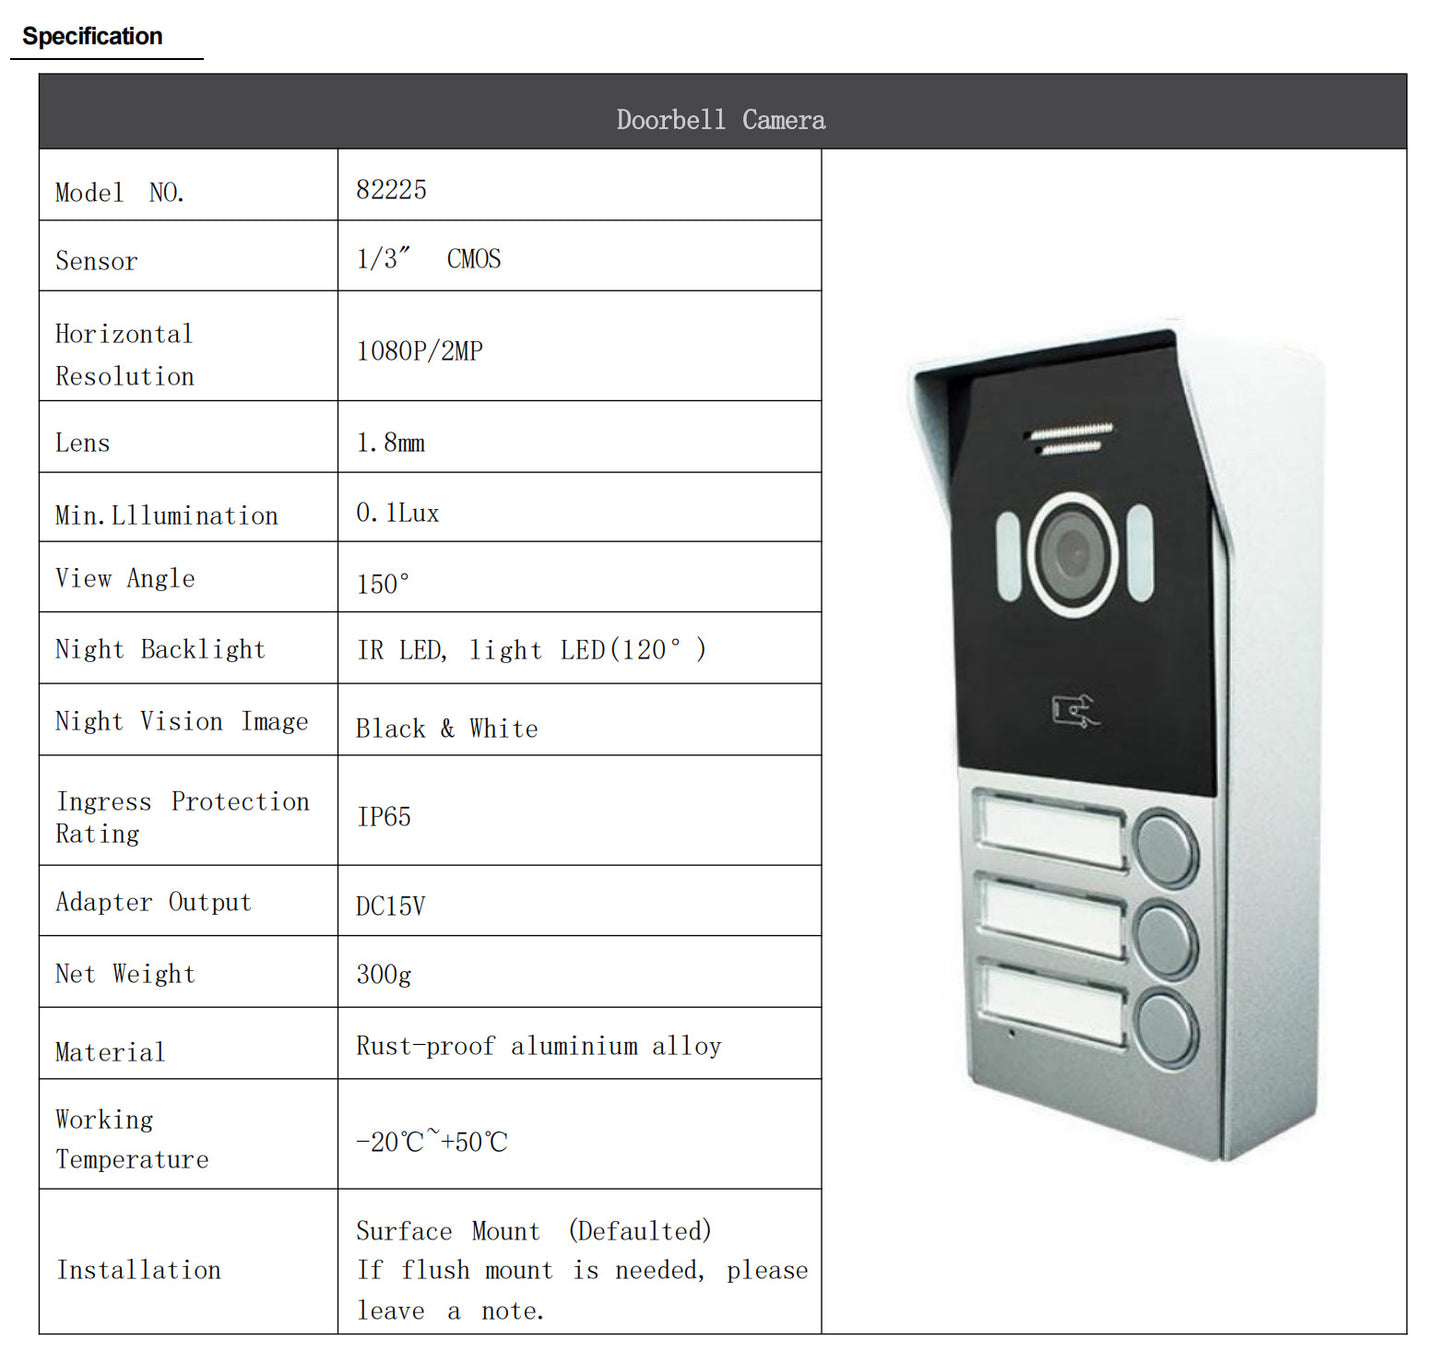 ANJIELOSMART 2 Wired Video Phone Video Intercom Doorbell 1080P Tuya 7 Inch Touch Monitor support Dahua and Hikvision  IP camera